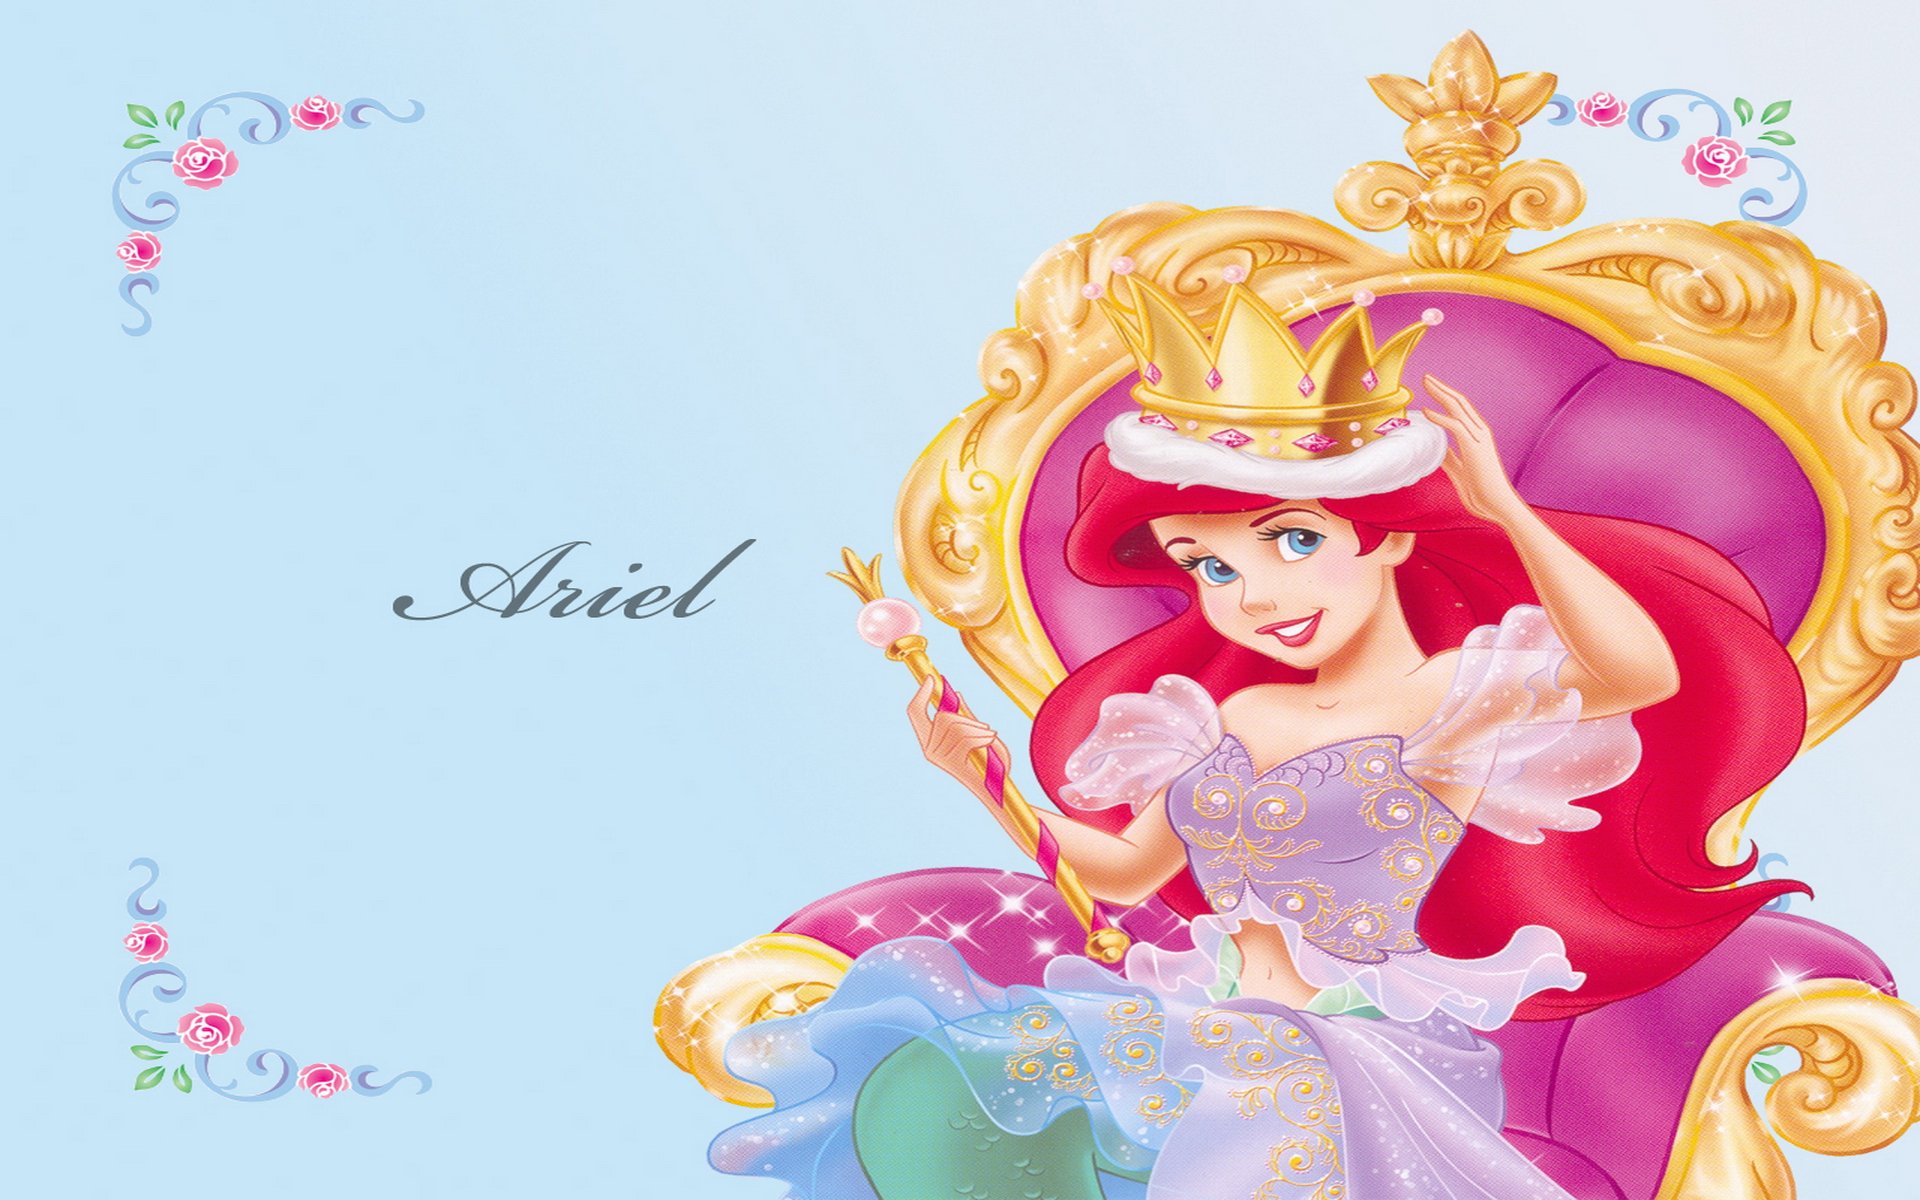 Disney Princess Ariel Wallpaper Desktop